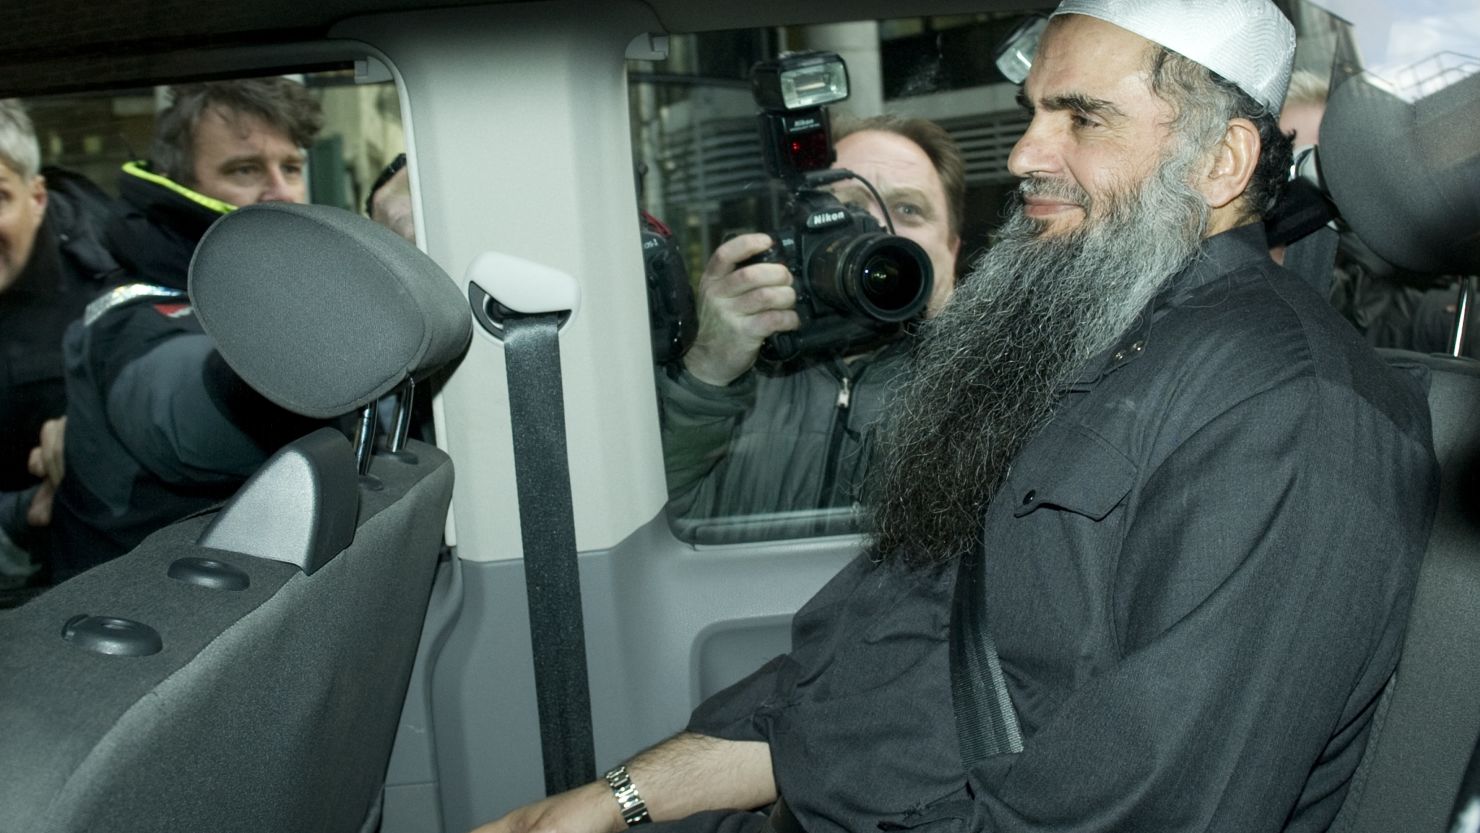 Muslim cleric Abu Qatada has been described as "more radical than Osama bin Laden." 